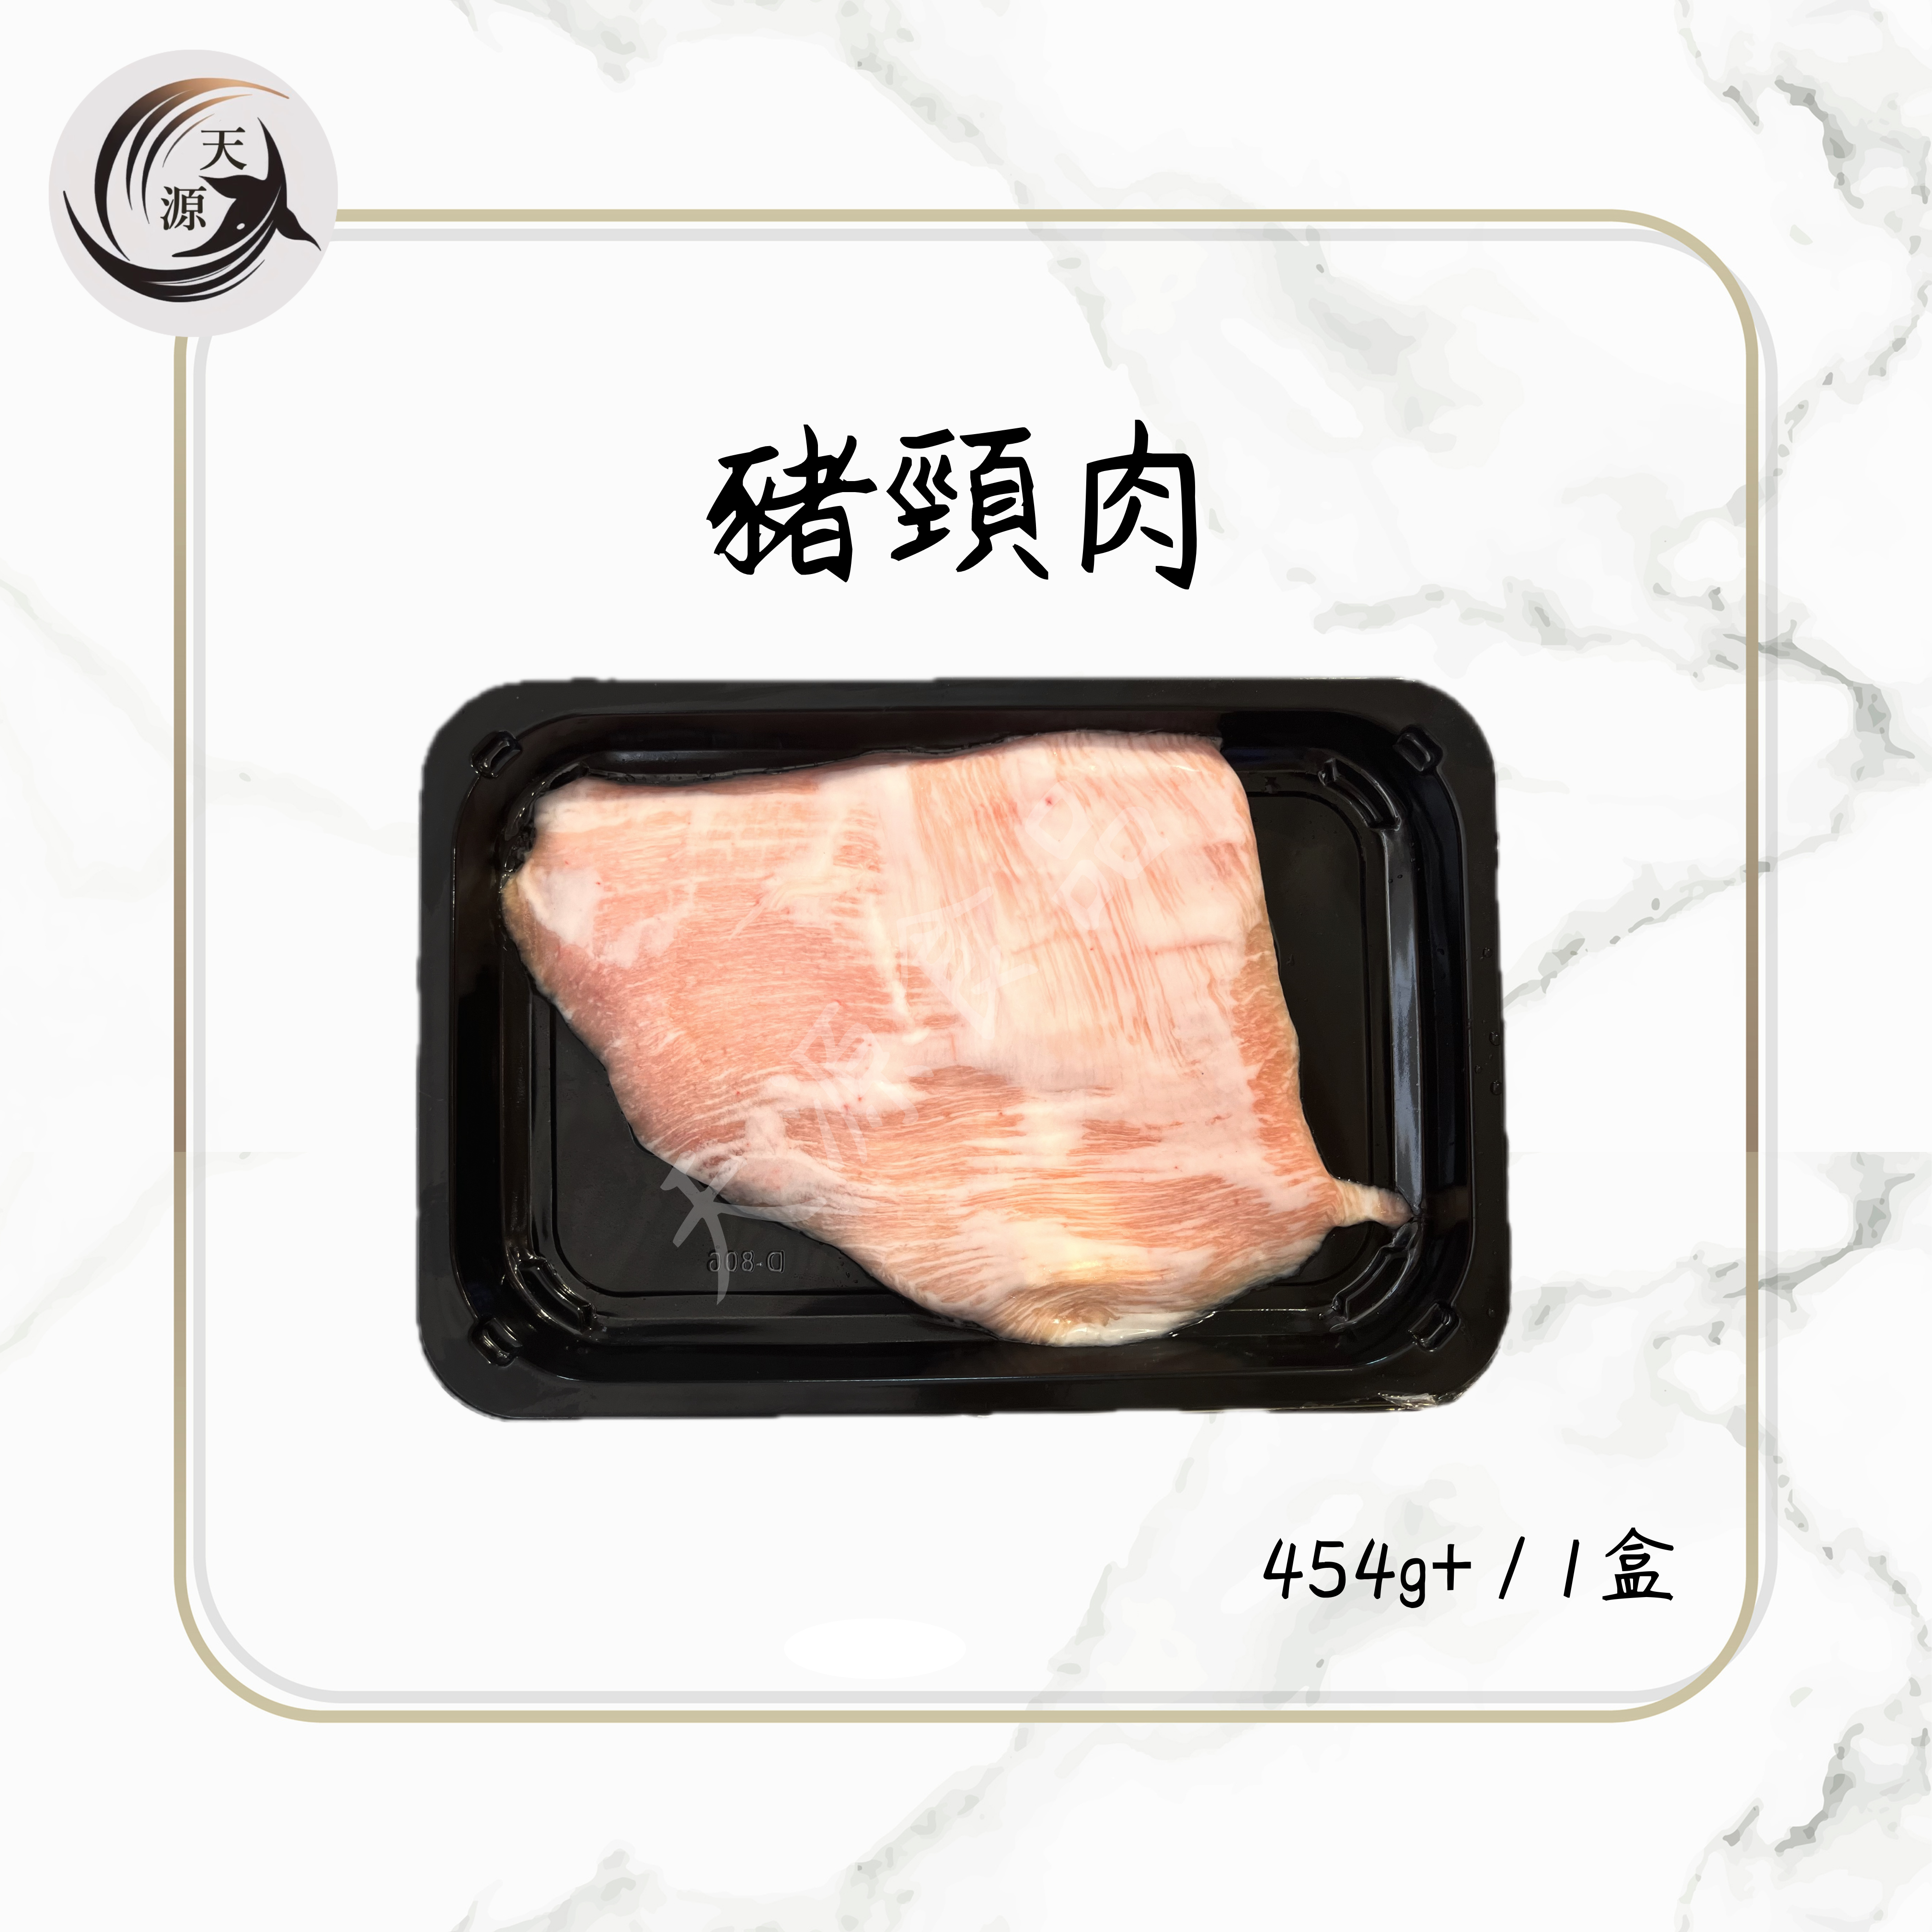 Pork neck (1 pound)